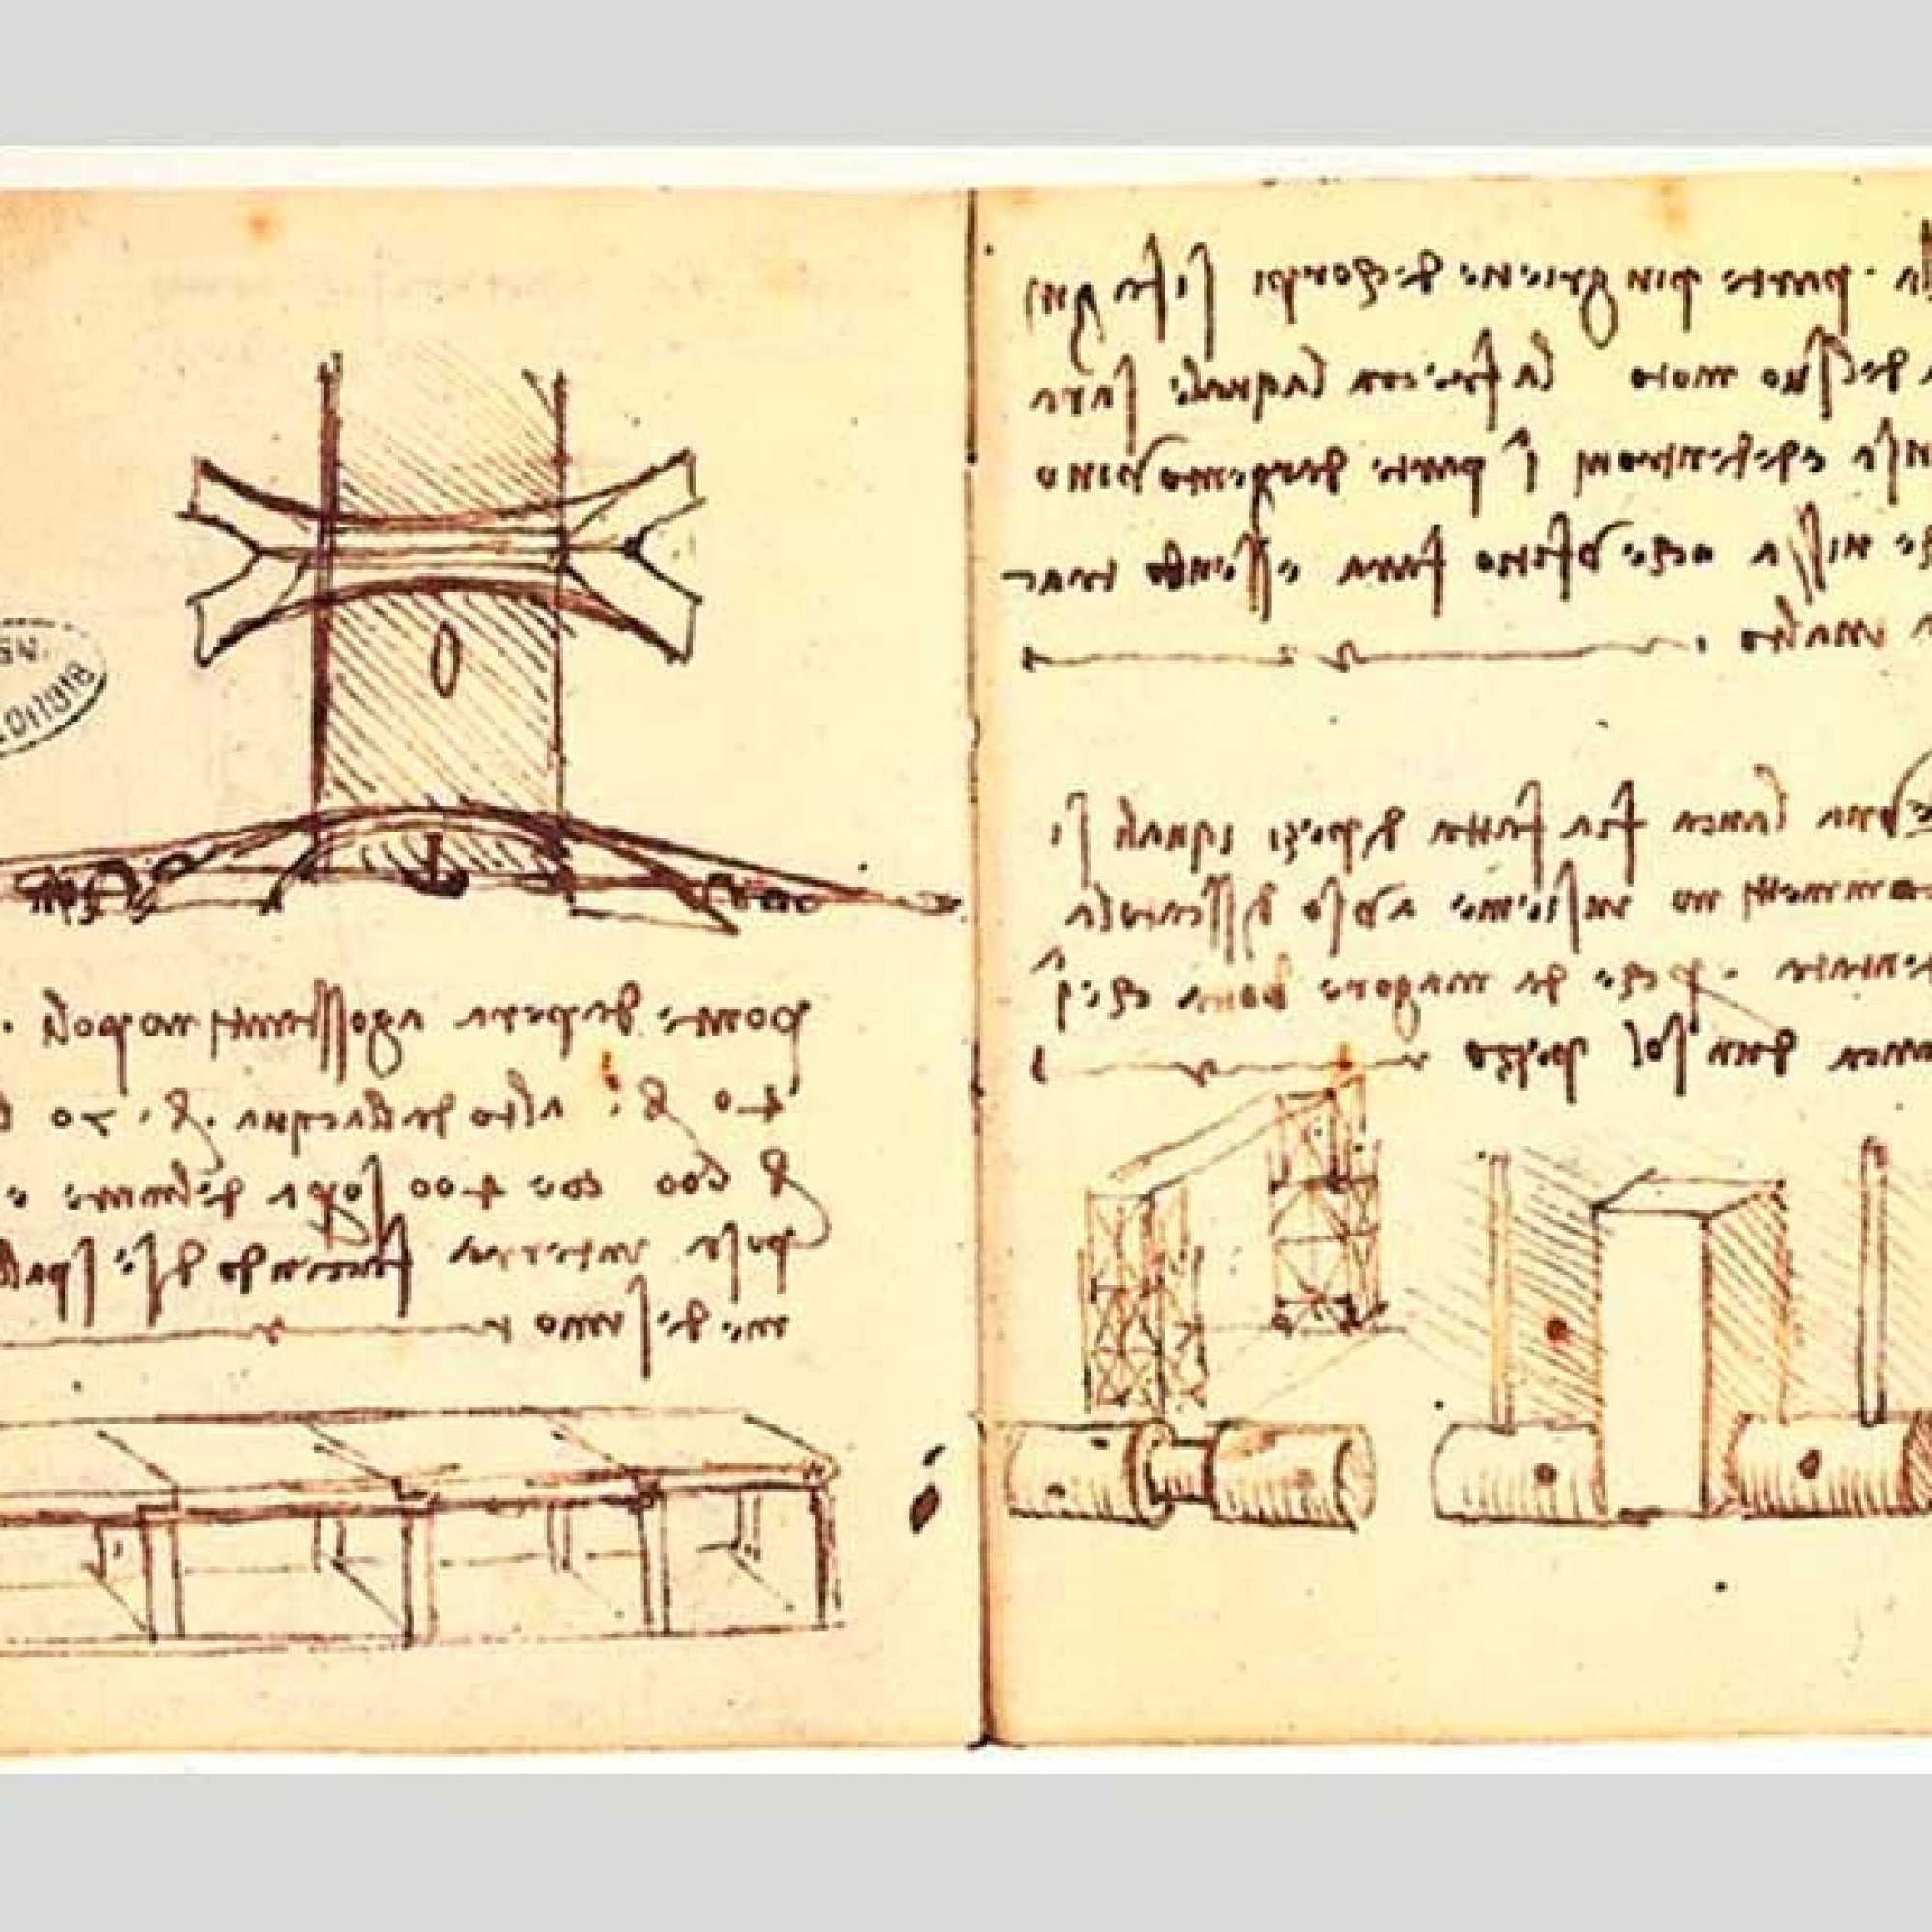 So stellte sich Leonardo da Vinci die Brücke vor. (wikimedia.org)